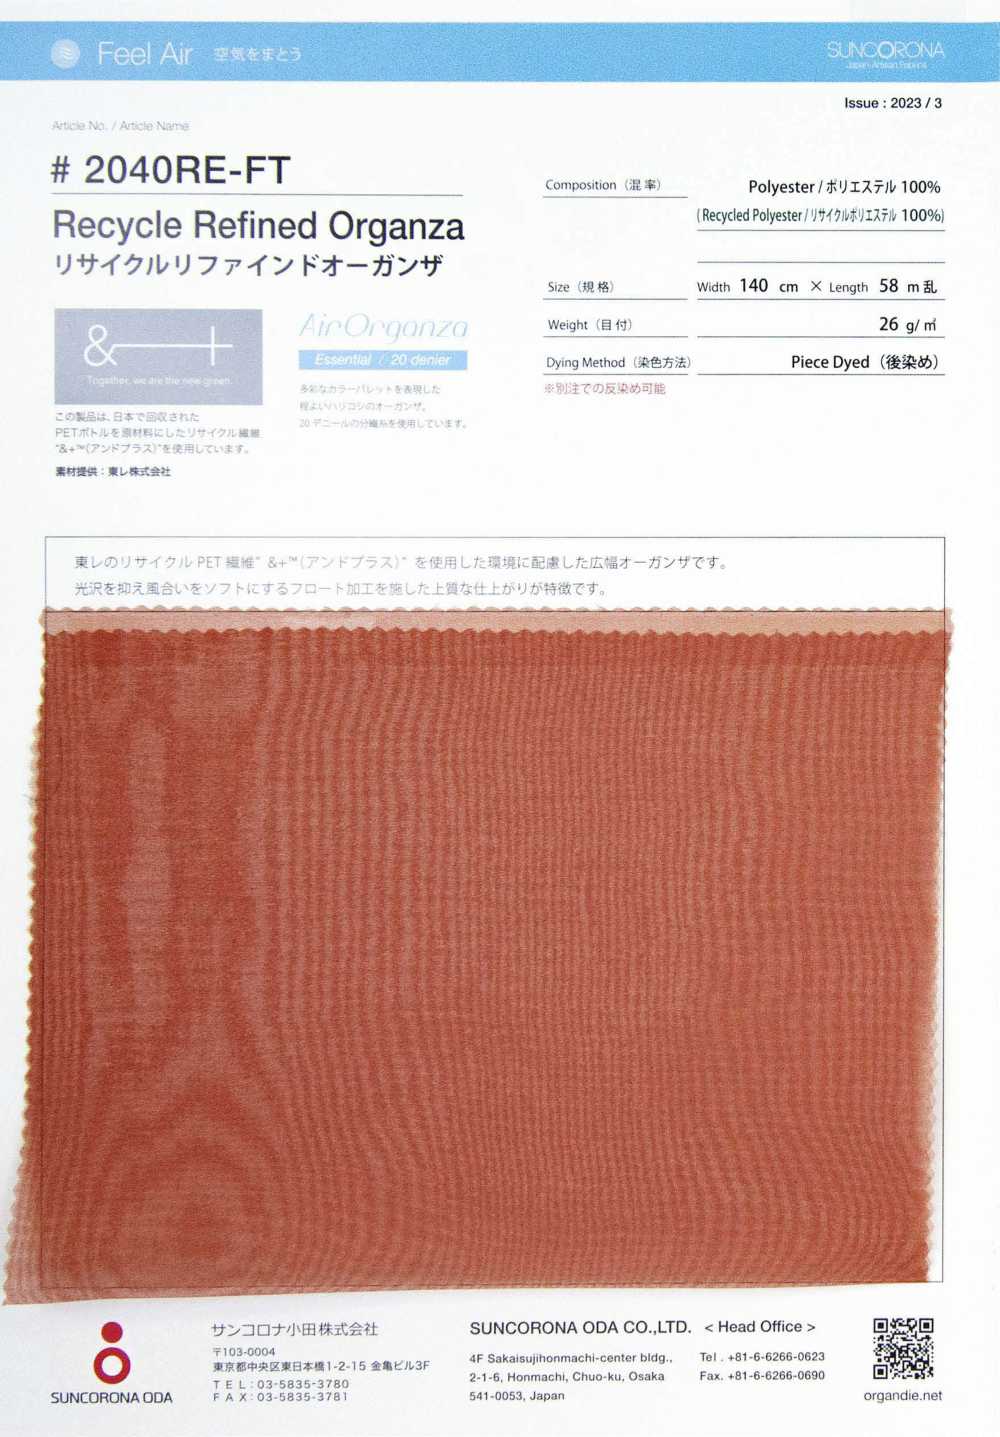 2040RE-FT Recycled Refined Organza[Textile / Fabric] Suncorona Oda